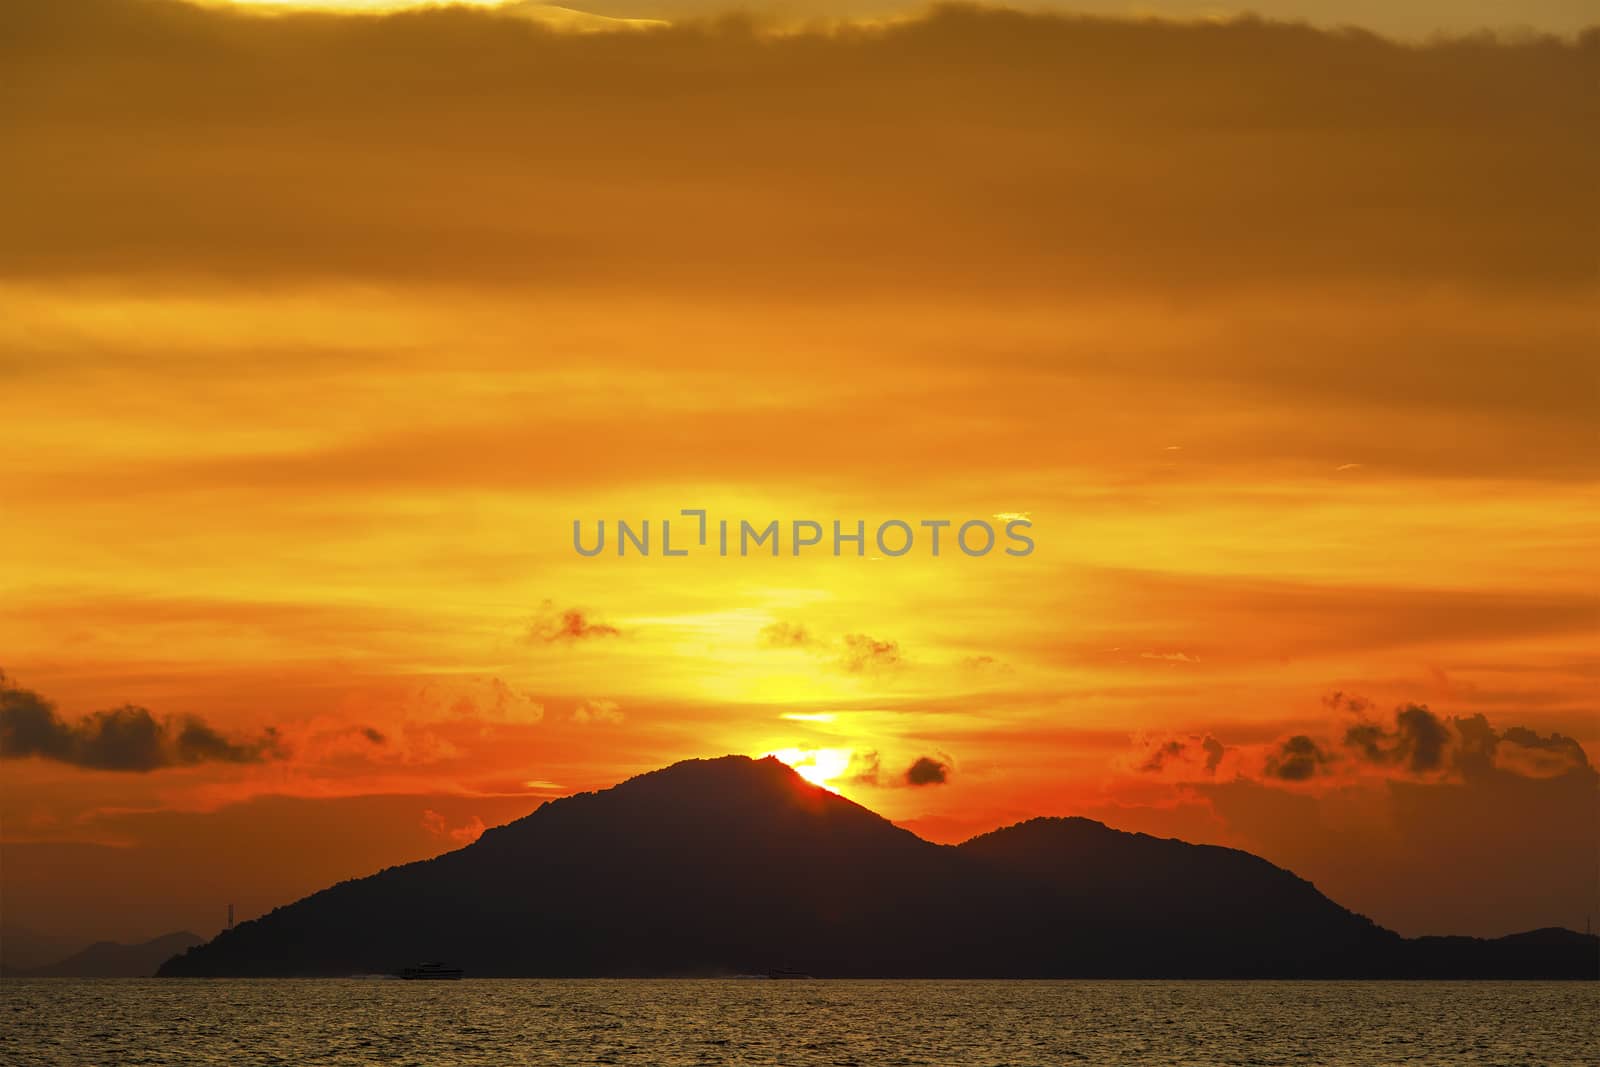 Sunset island by kawing921